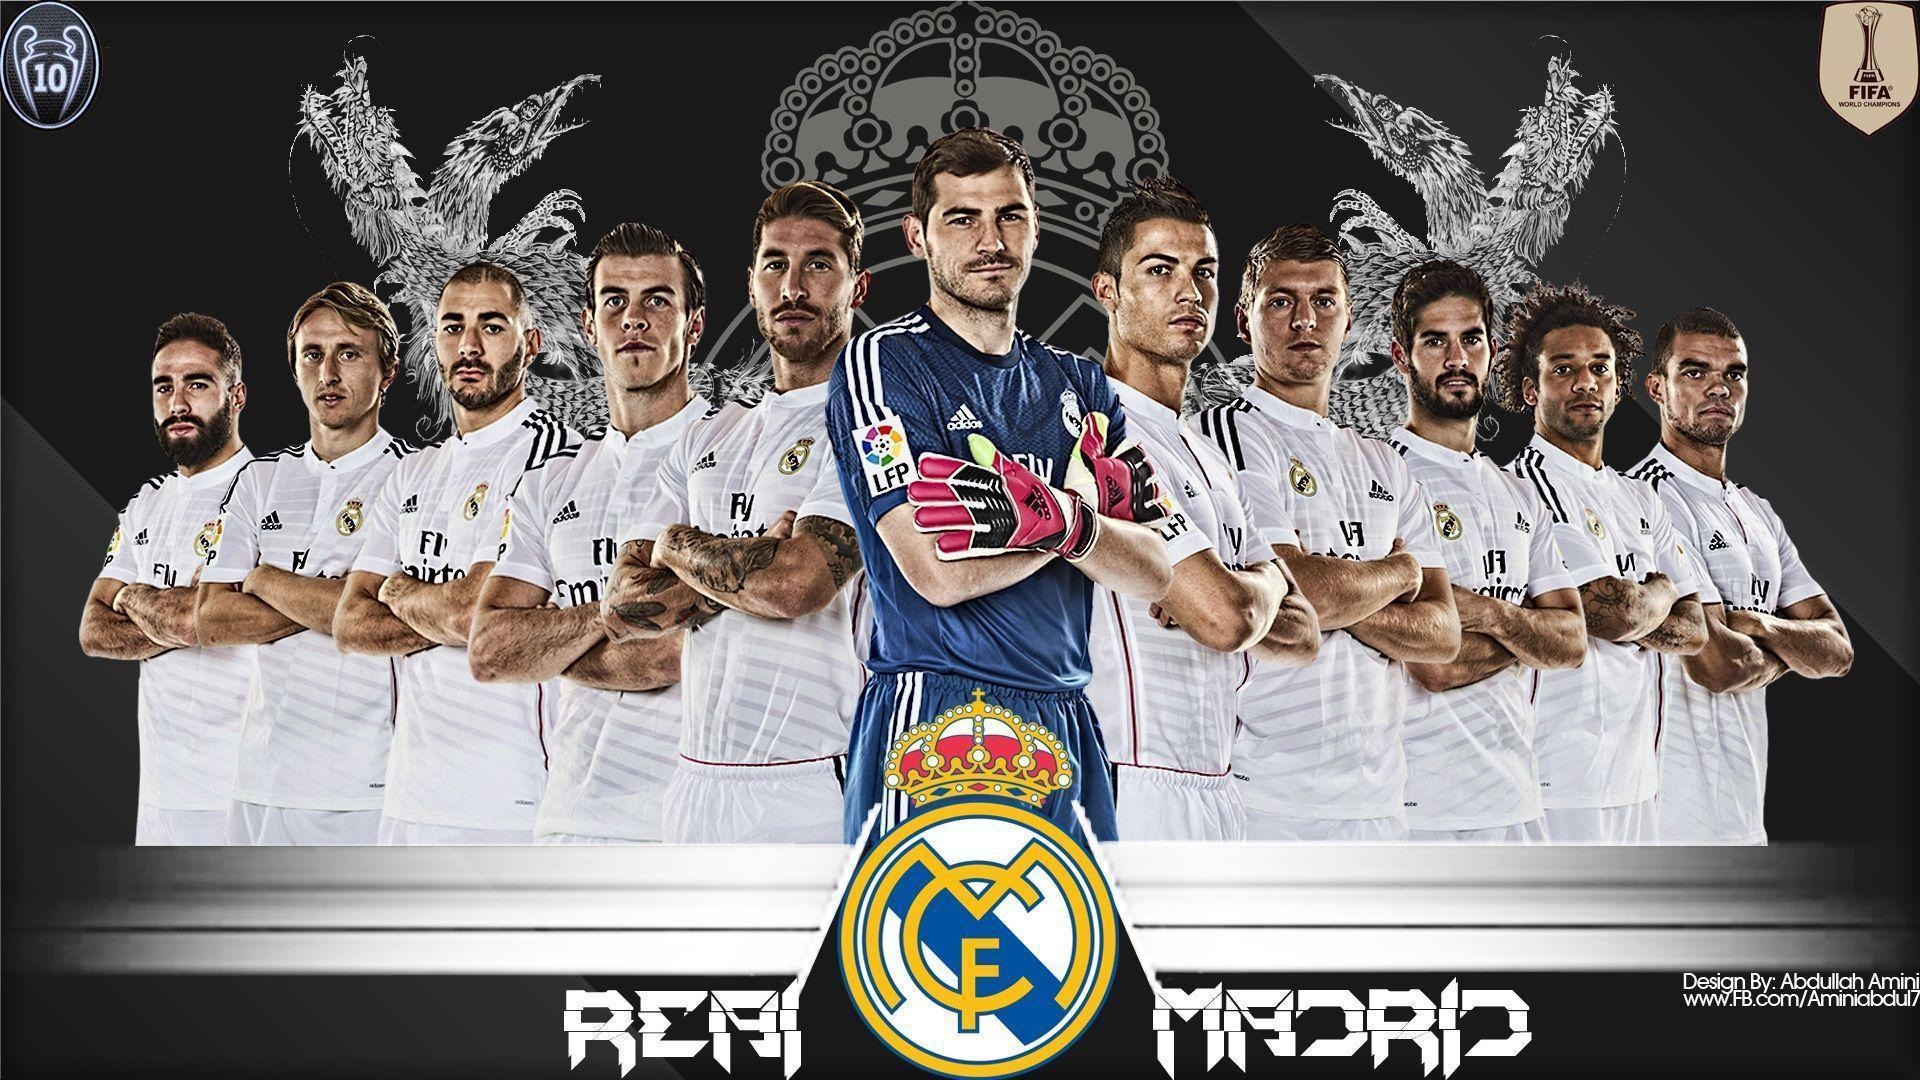 New Real Madrid Wallpaper Full HD Soccer